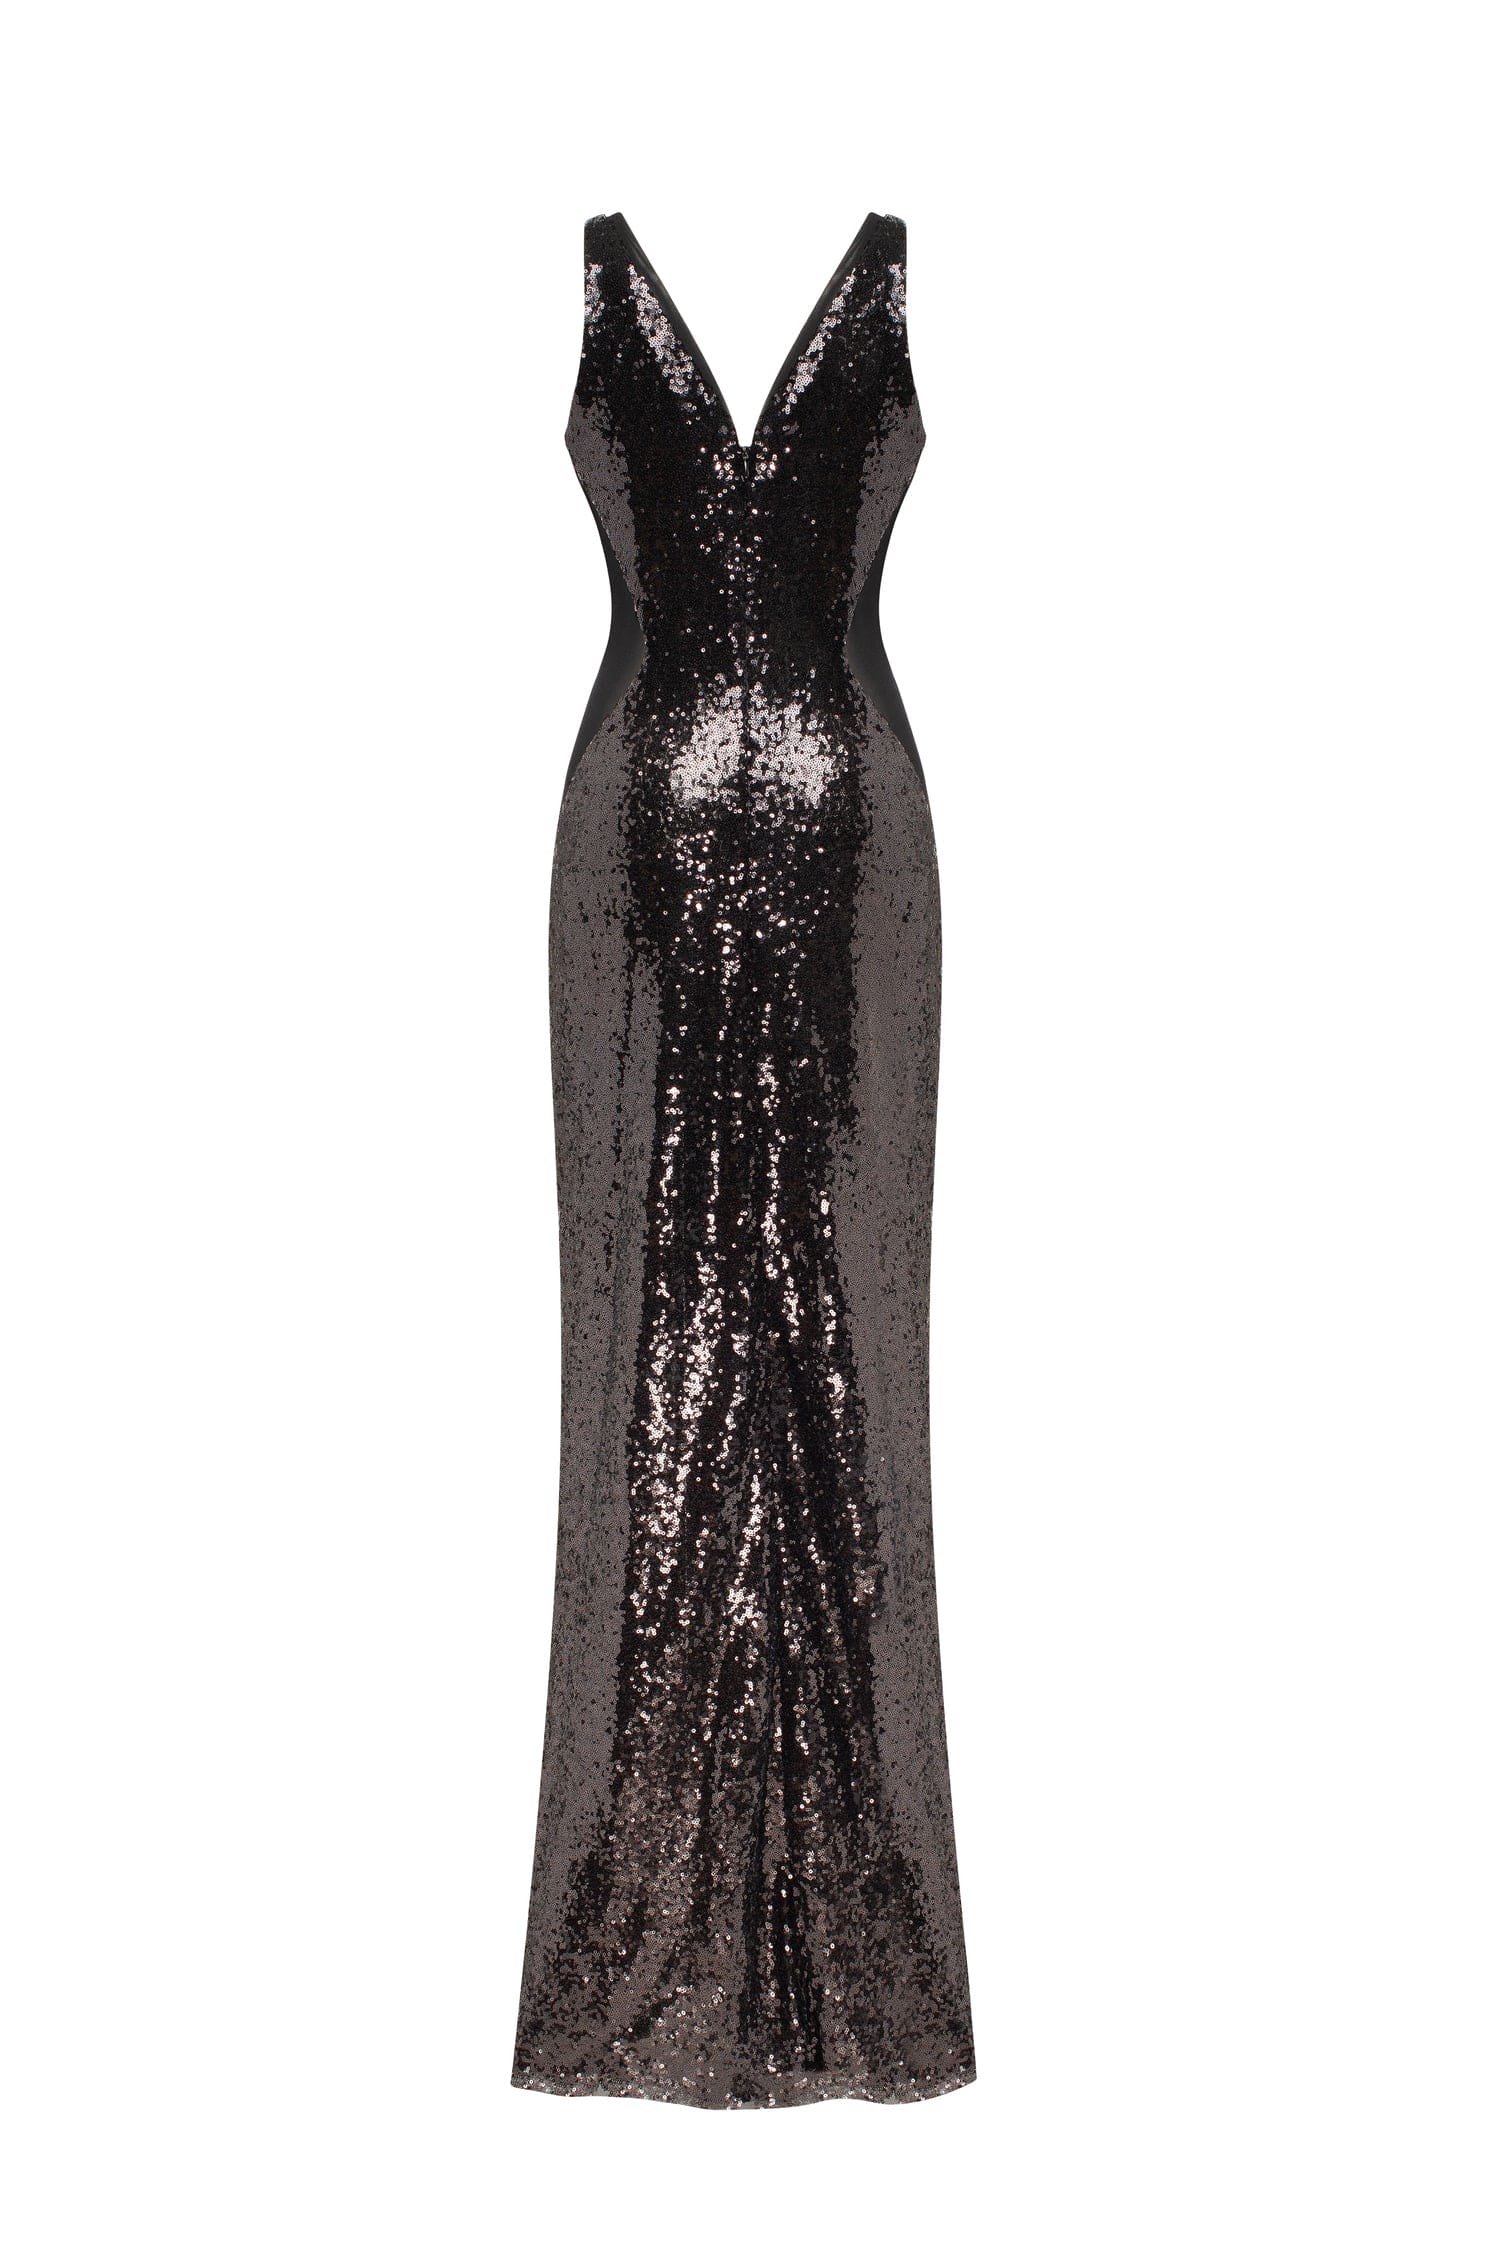 Dazzling fully sequined black maxi dress, Smoky Quartz